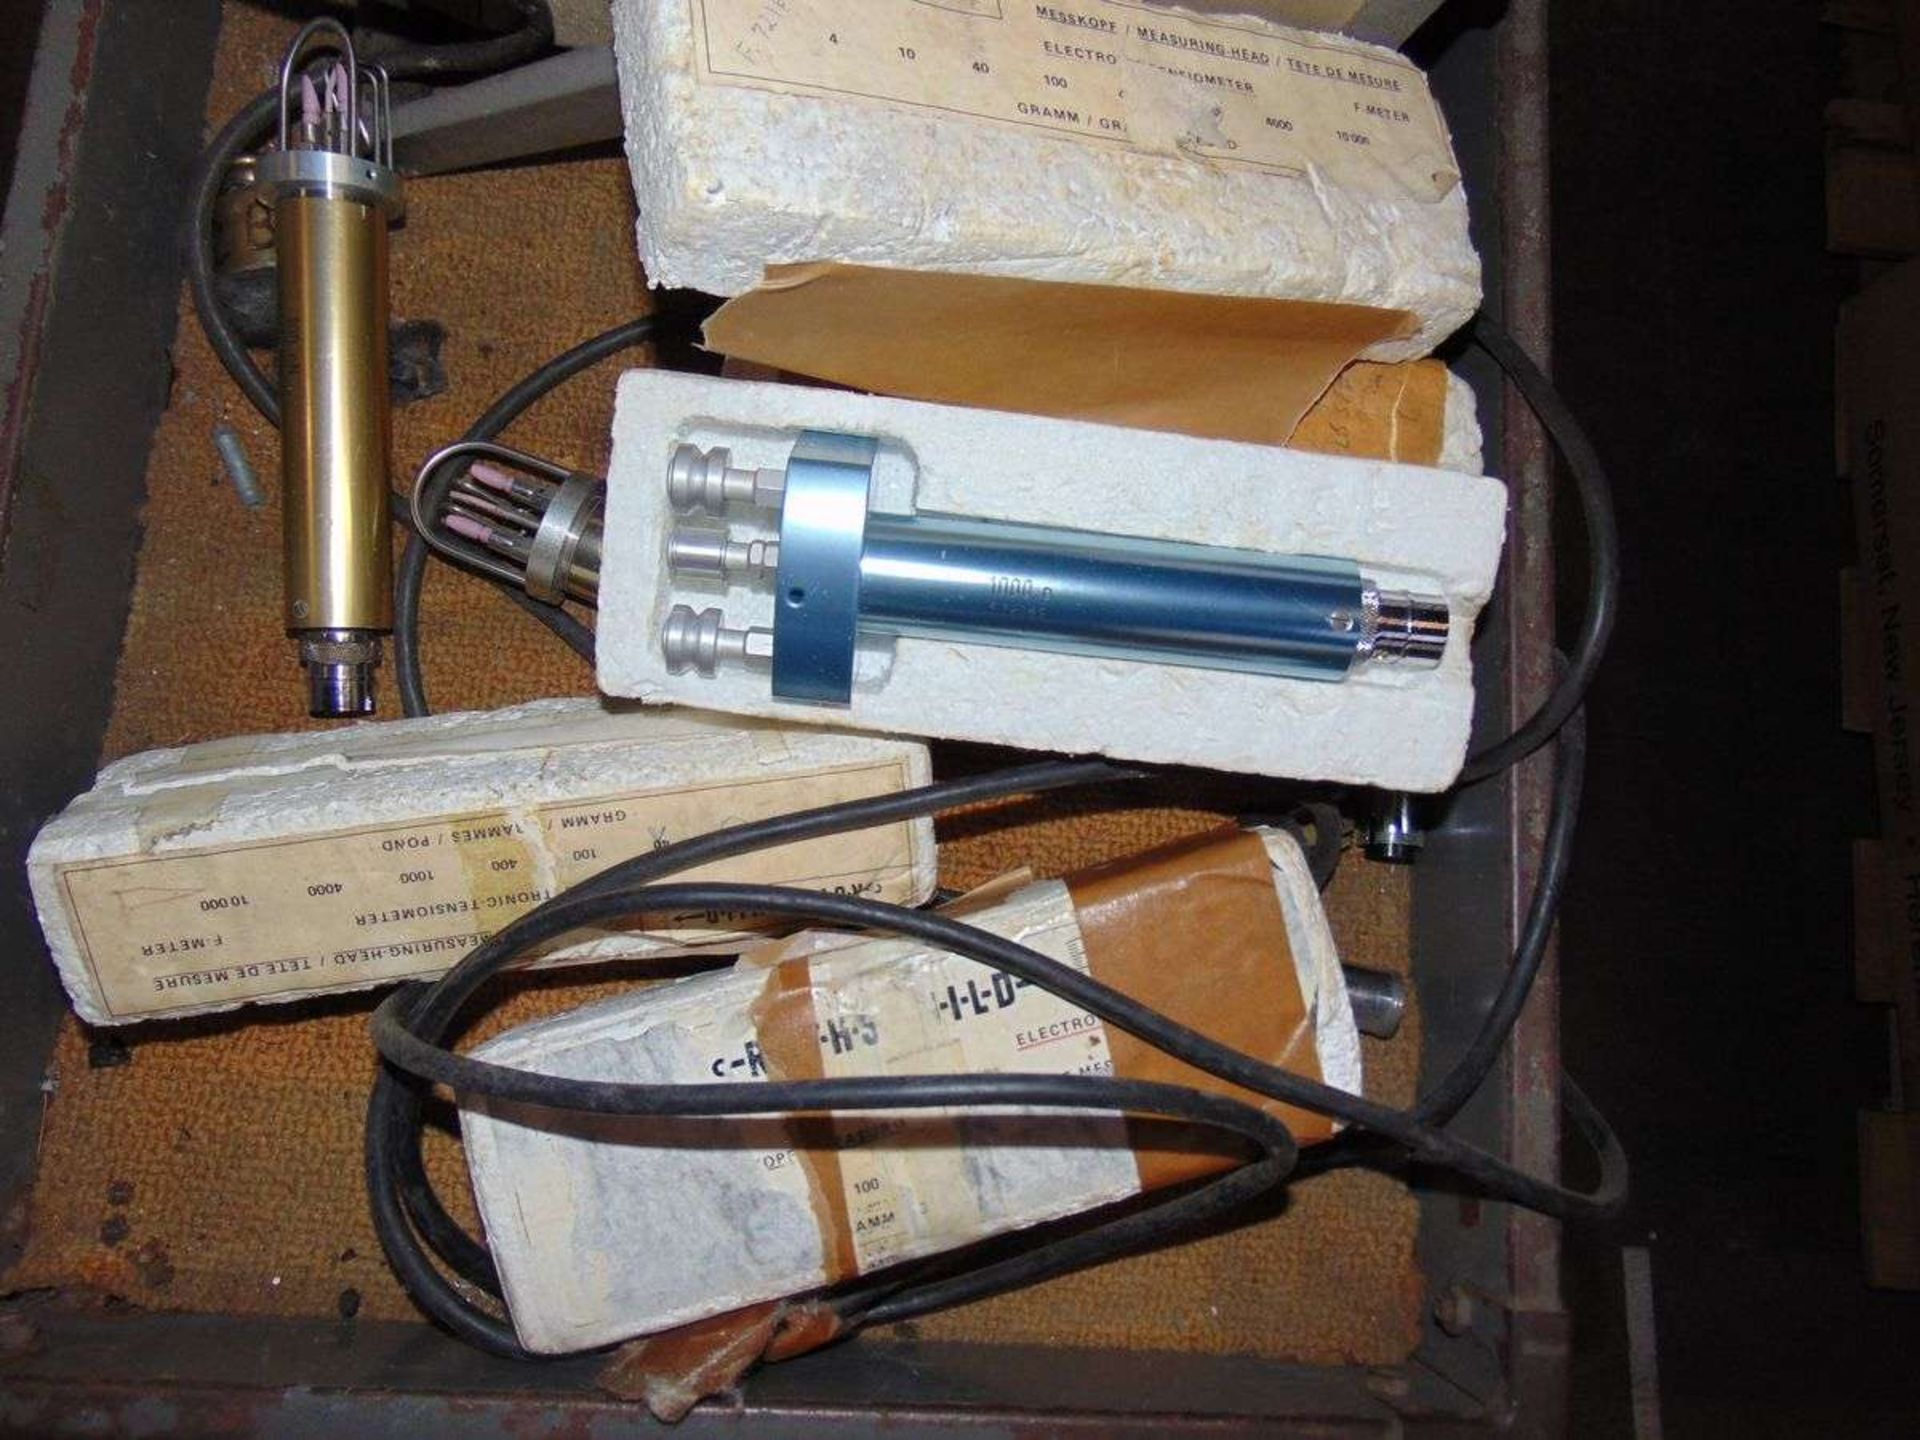 Rothschild Tensiometer Test Equipment - Image 3 of 4